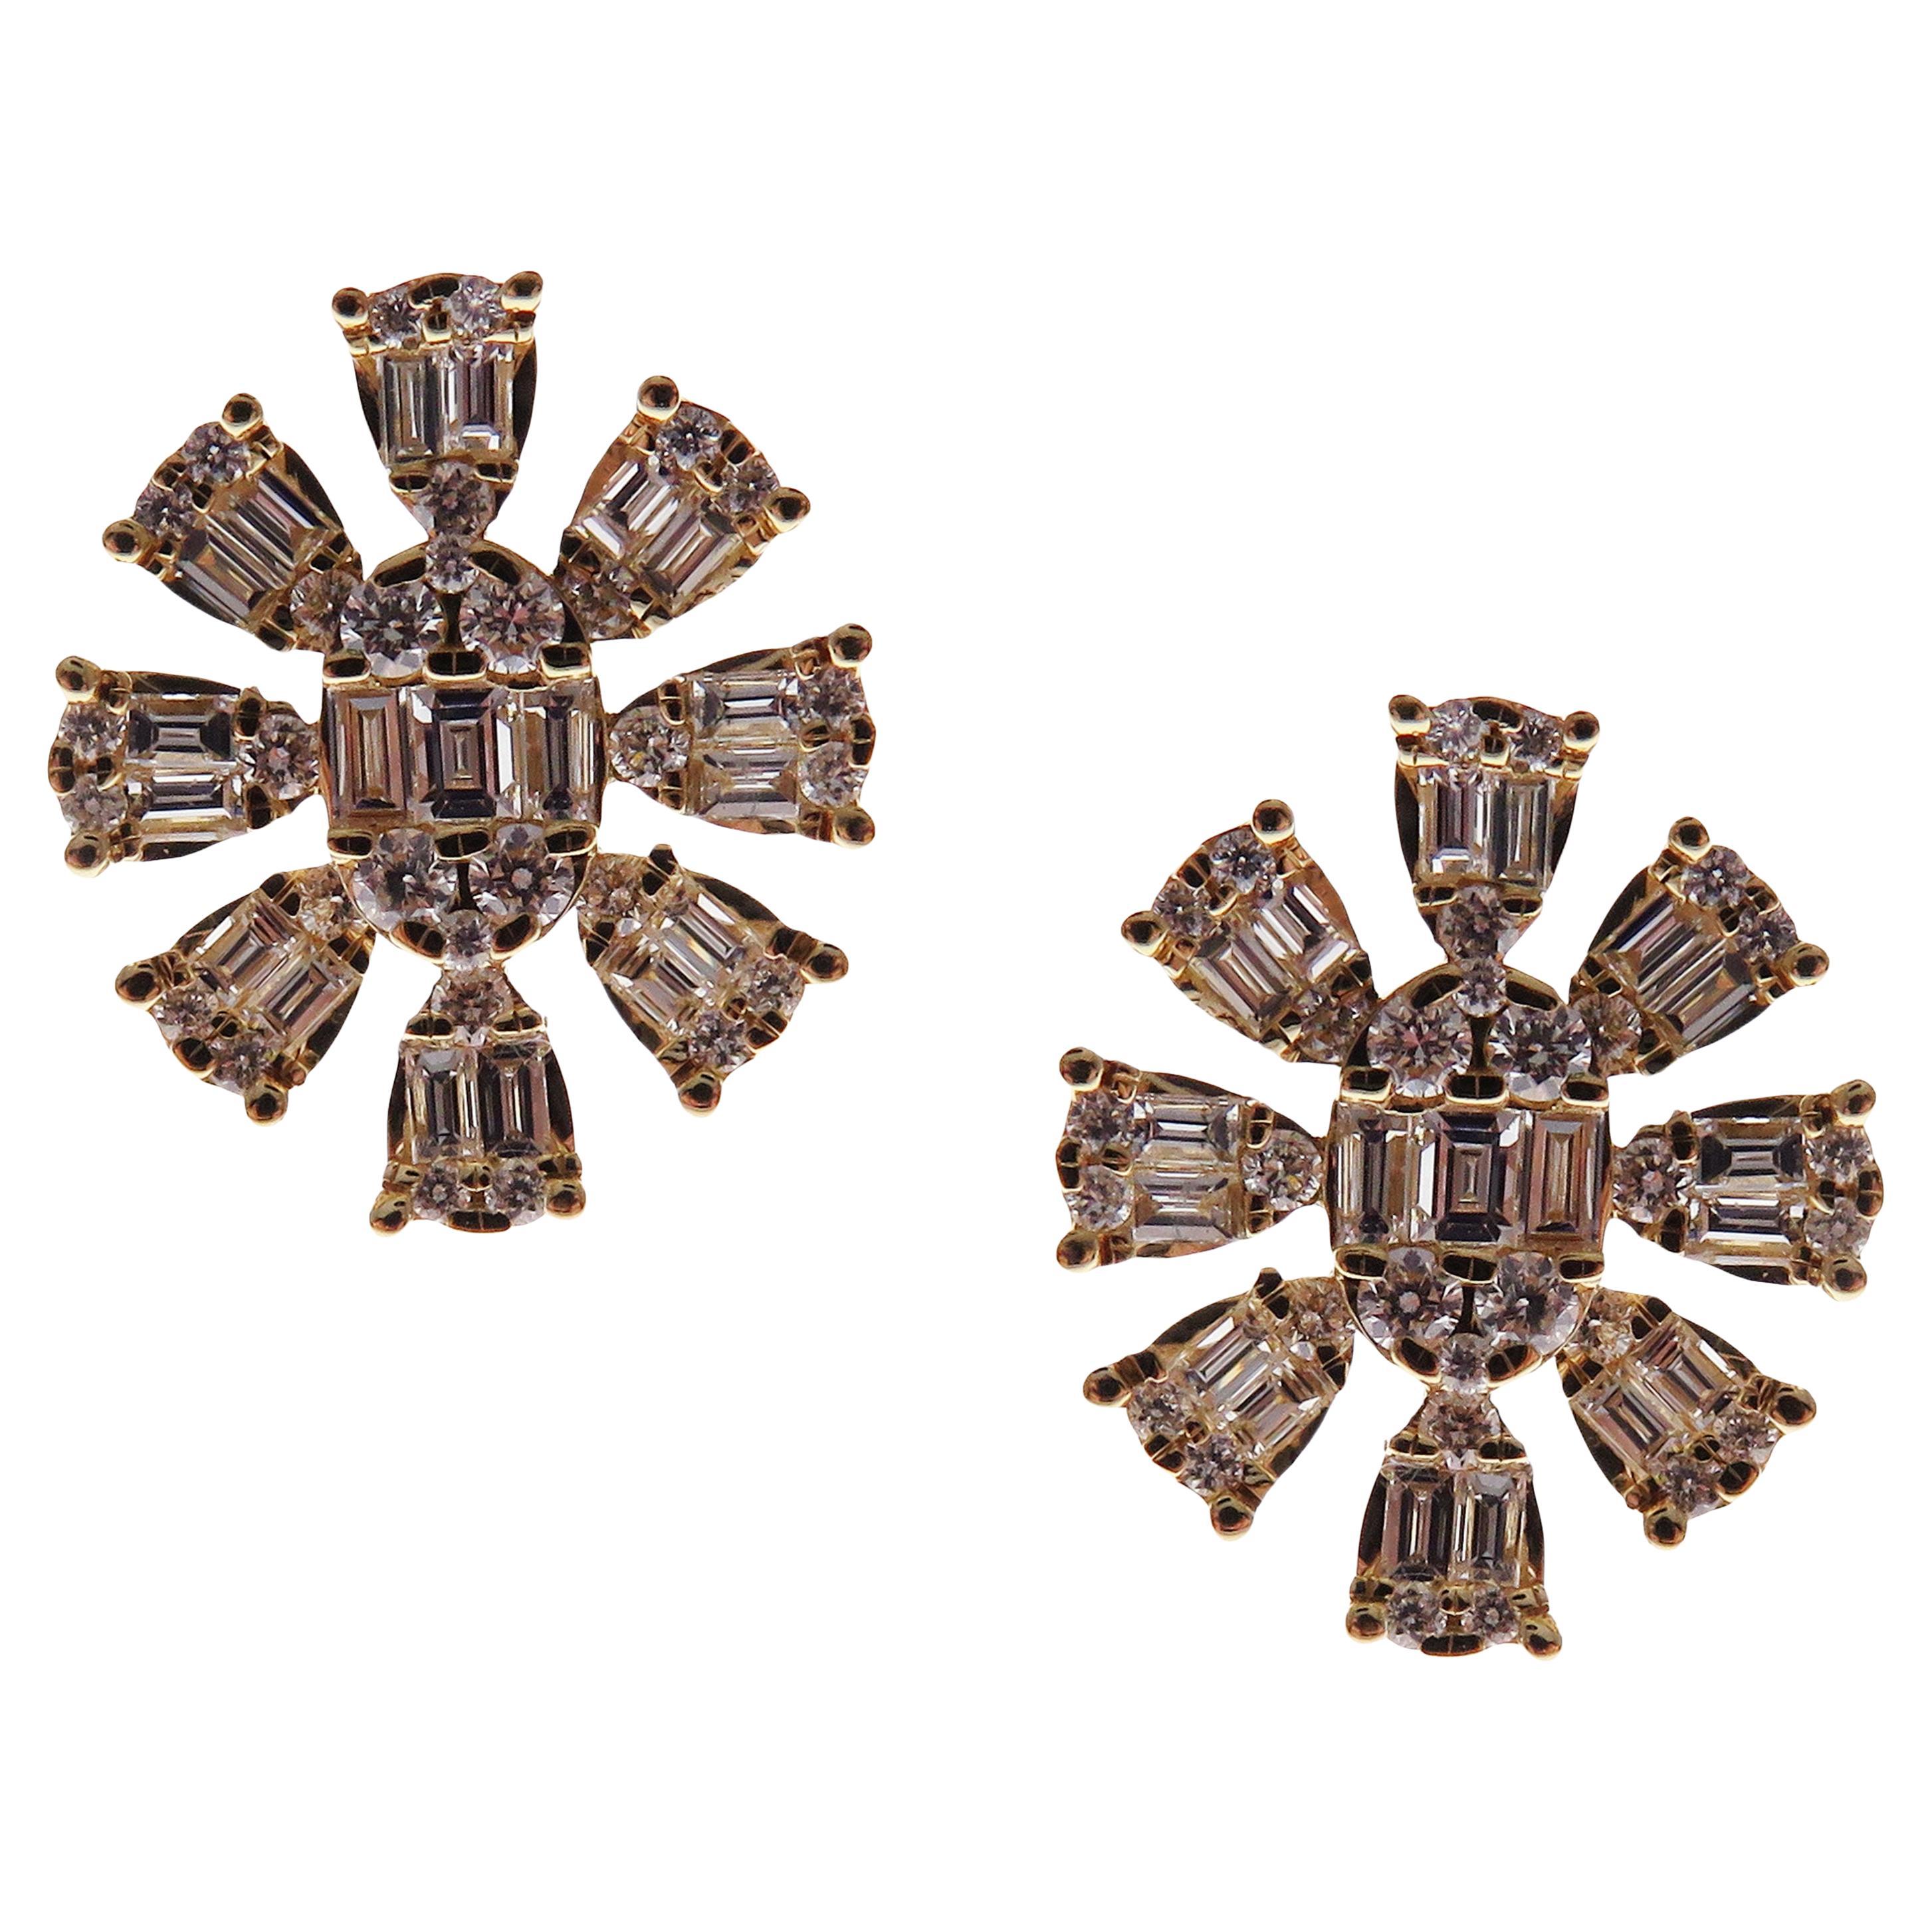 18-Karat Yellow Gold Round and Baguette Diamonds Snowflake Stud Earrings